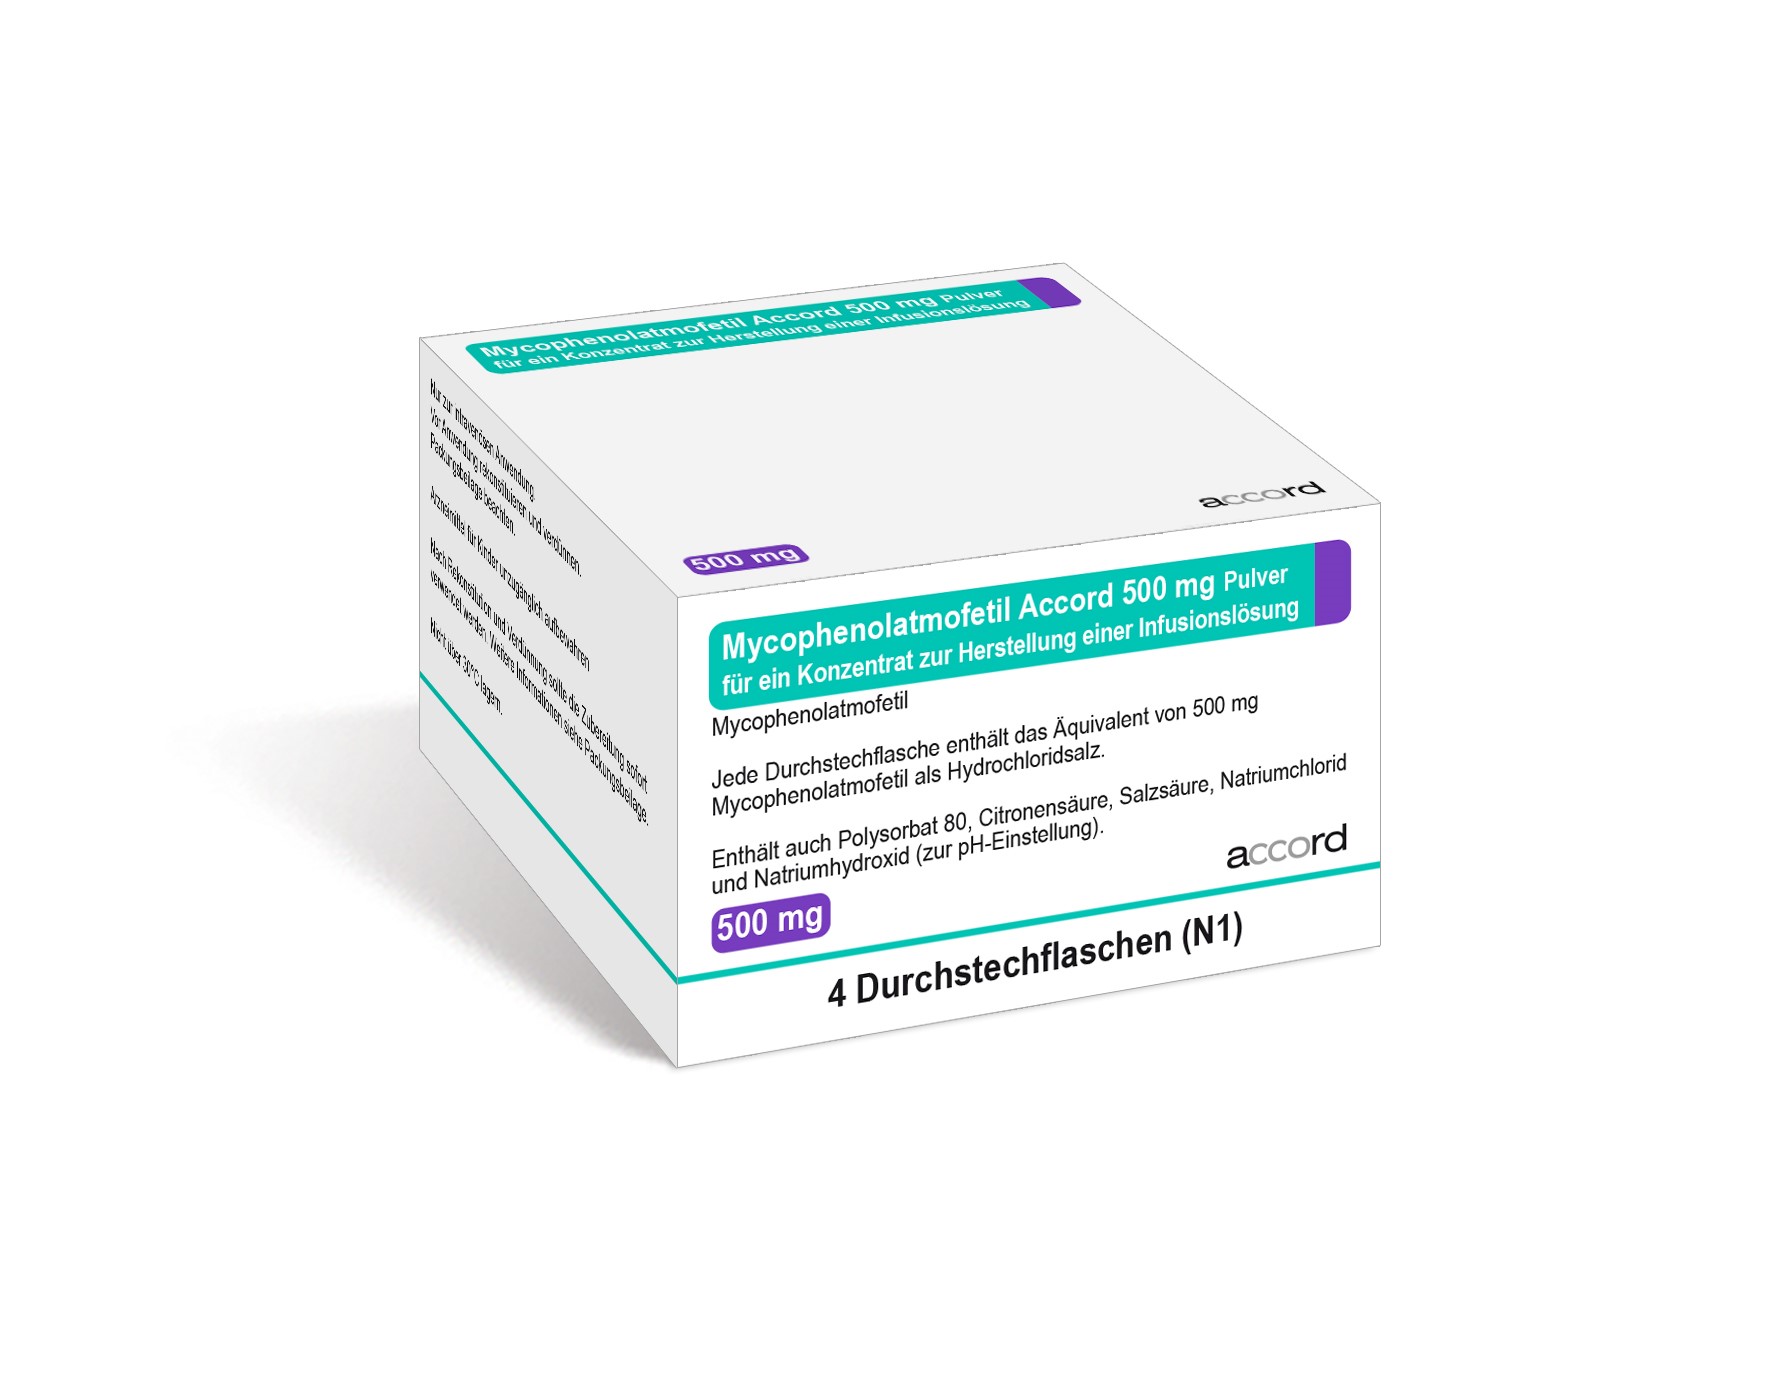 Accord Packshot Mycophenolatmofetil Pulver 500 mg